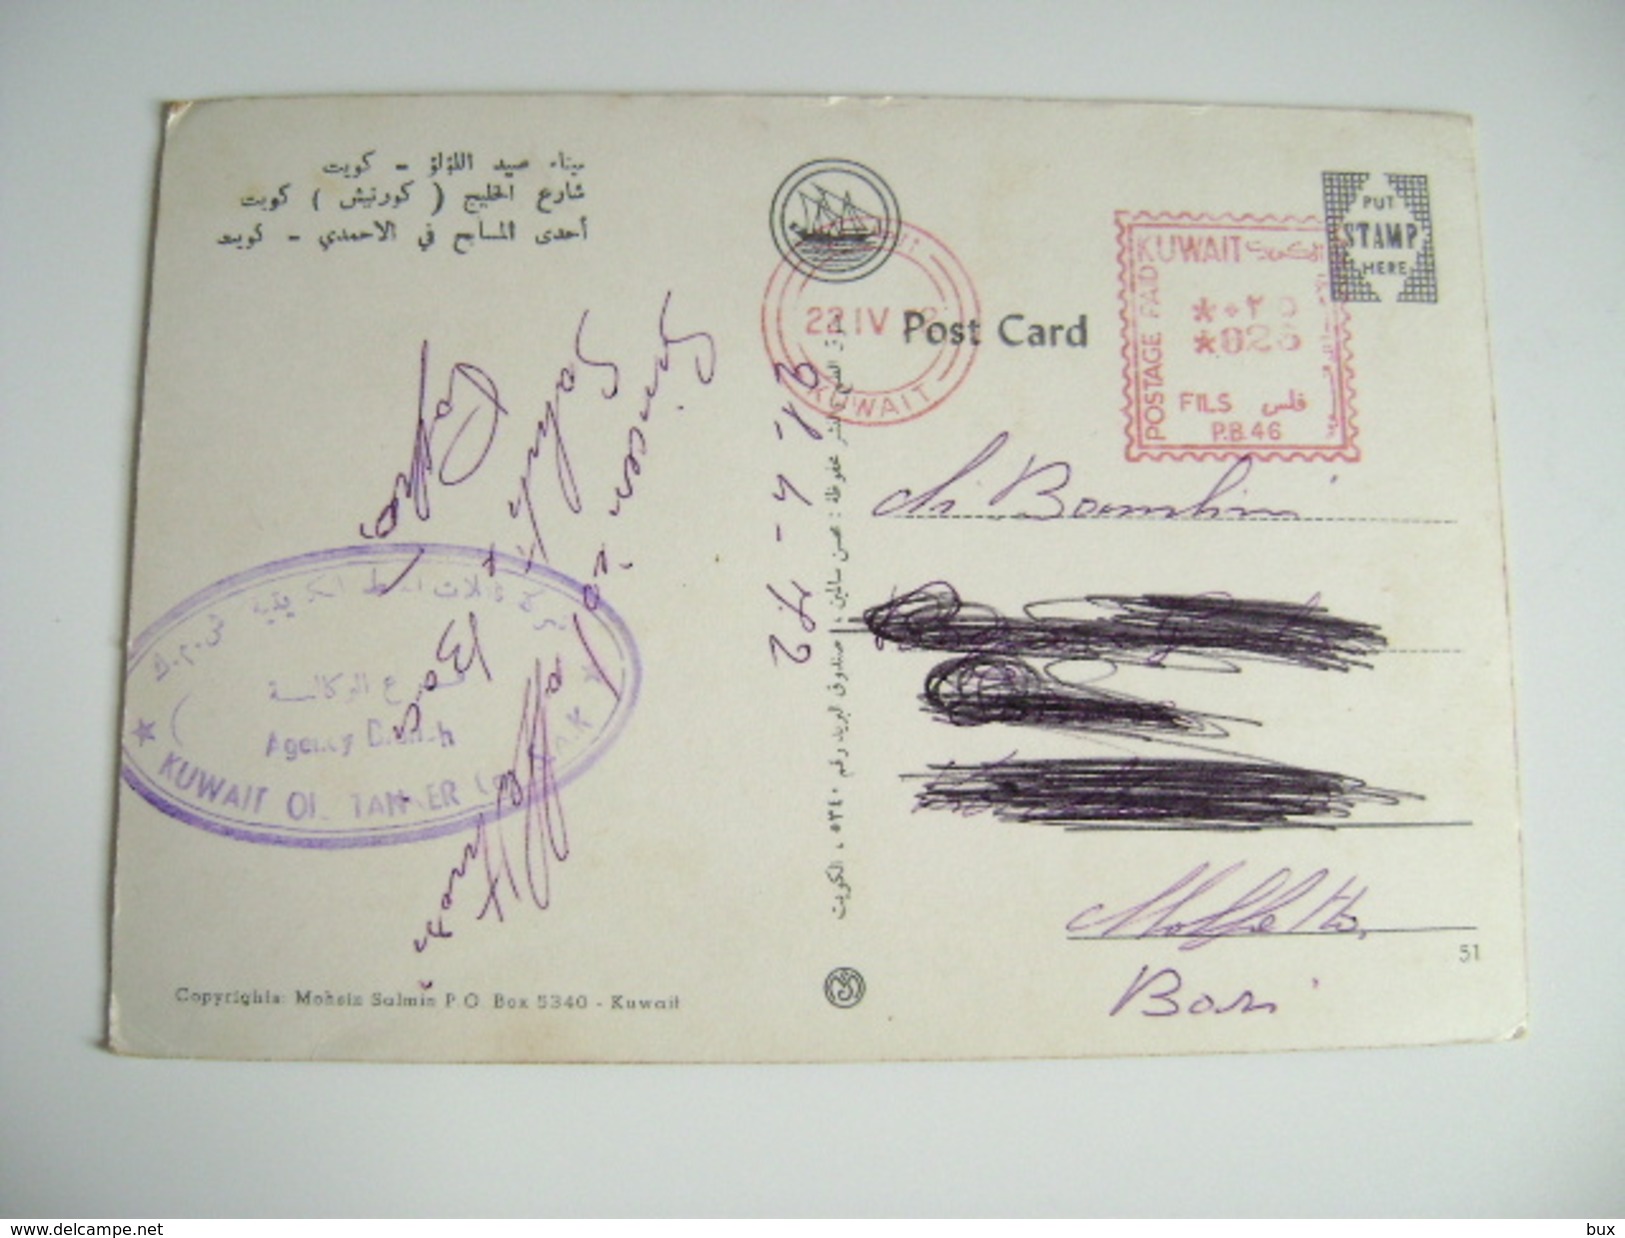 1972  KUWAIT   TIMBRE  Kuwait Oil Tanker   Agency Branch  Marine   PIN  UP  FEMME BIKINI  COSTUME  POSTCARD  USED - Koweït